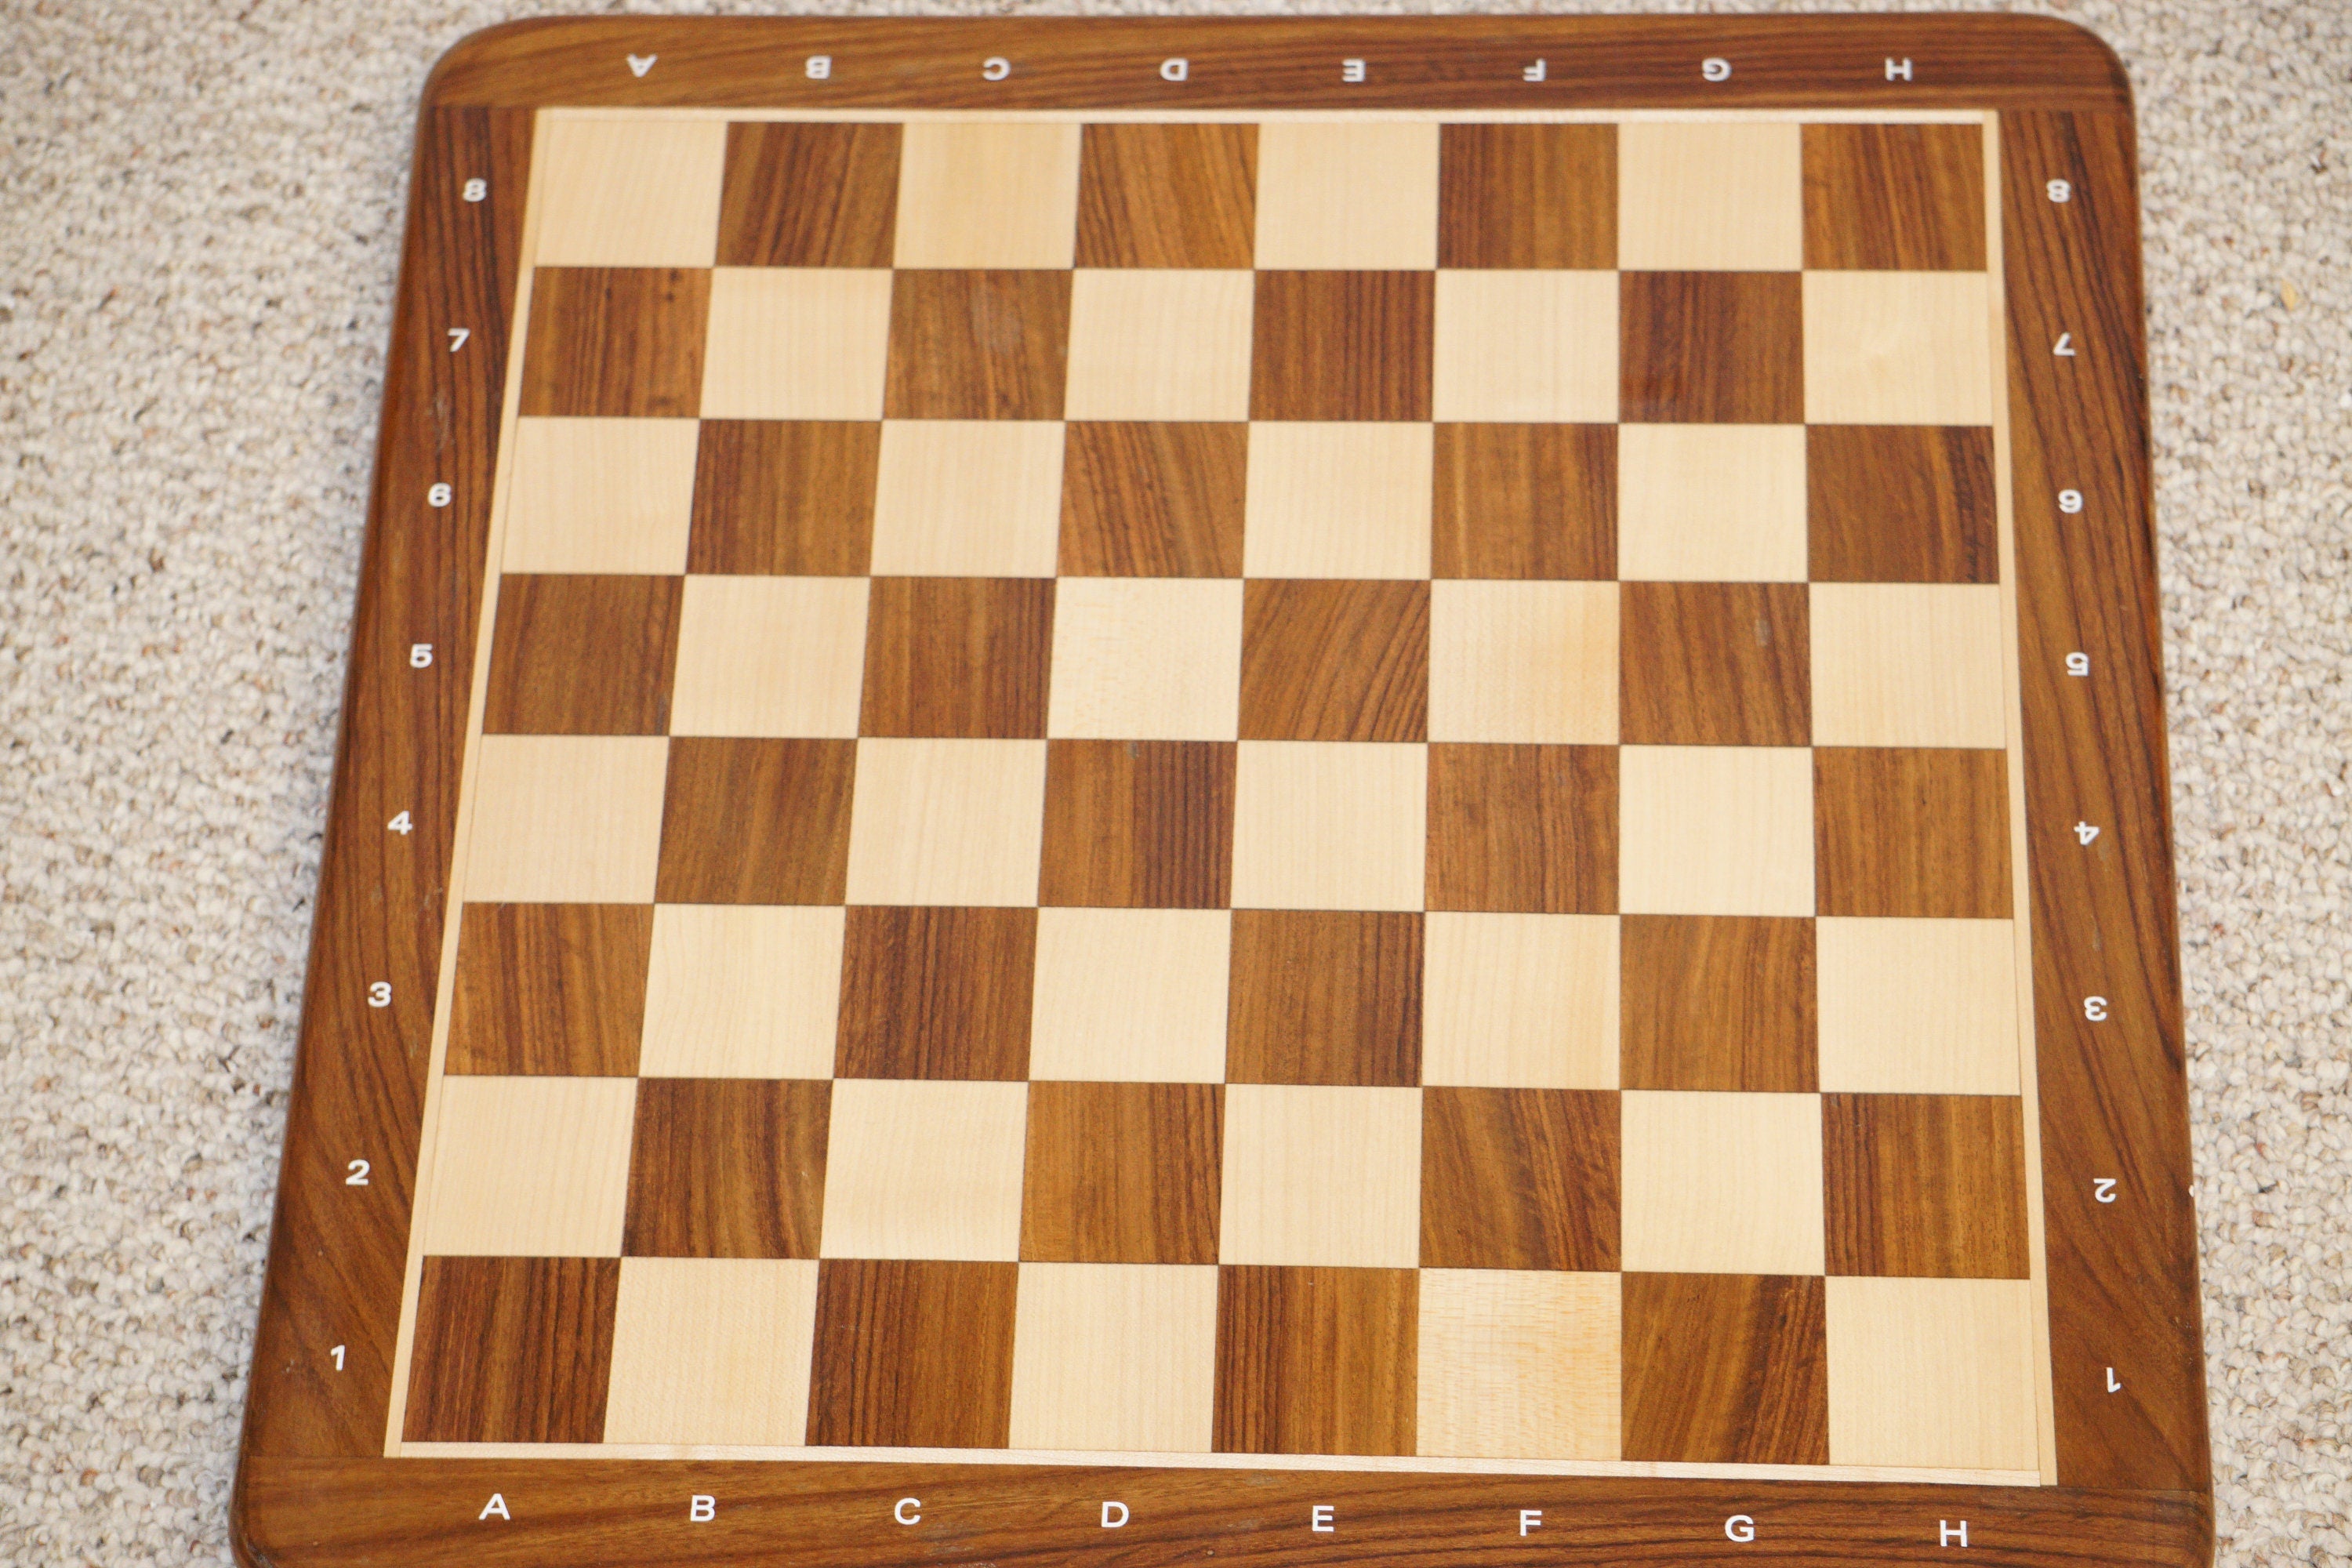 Handmade Tournament Wooden Chess Board made with Sheesham Wood